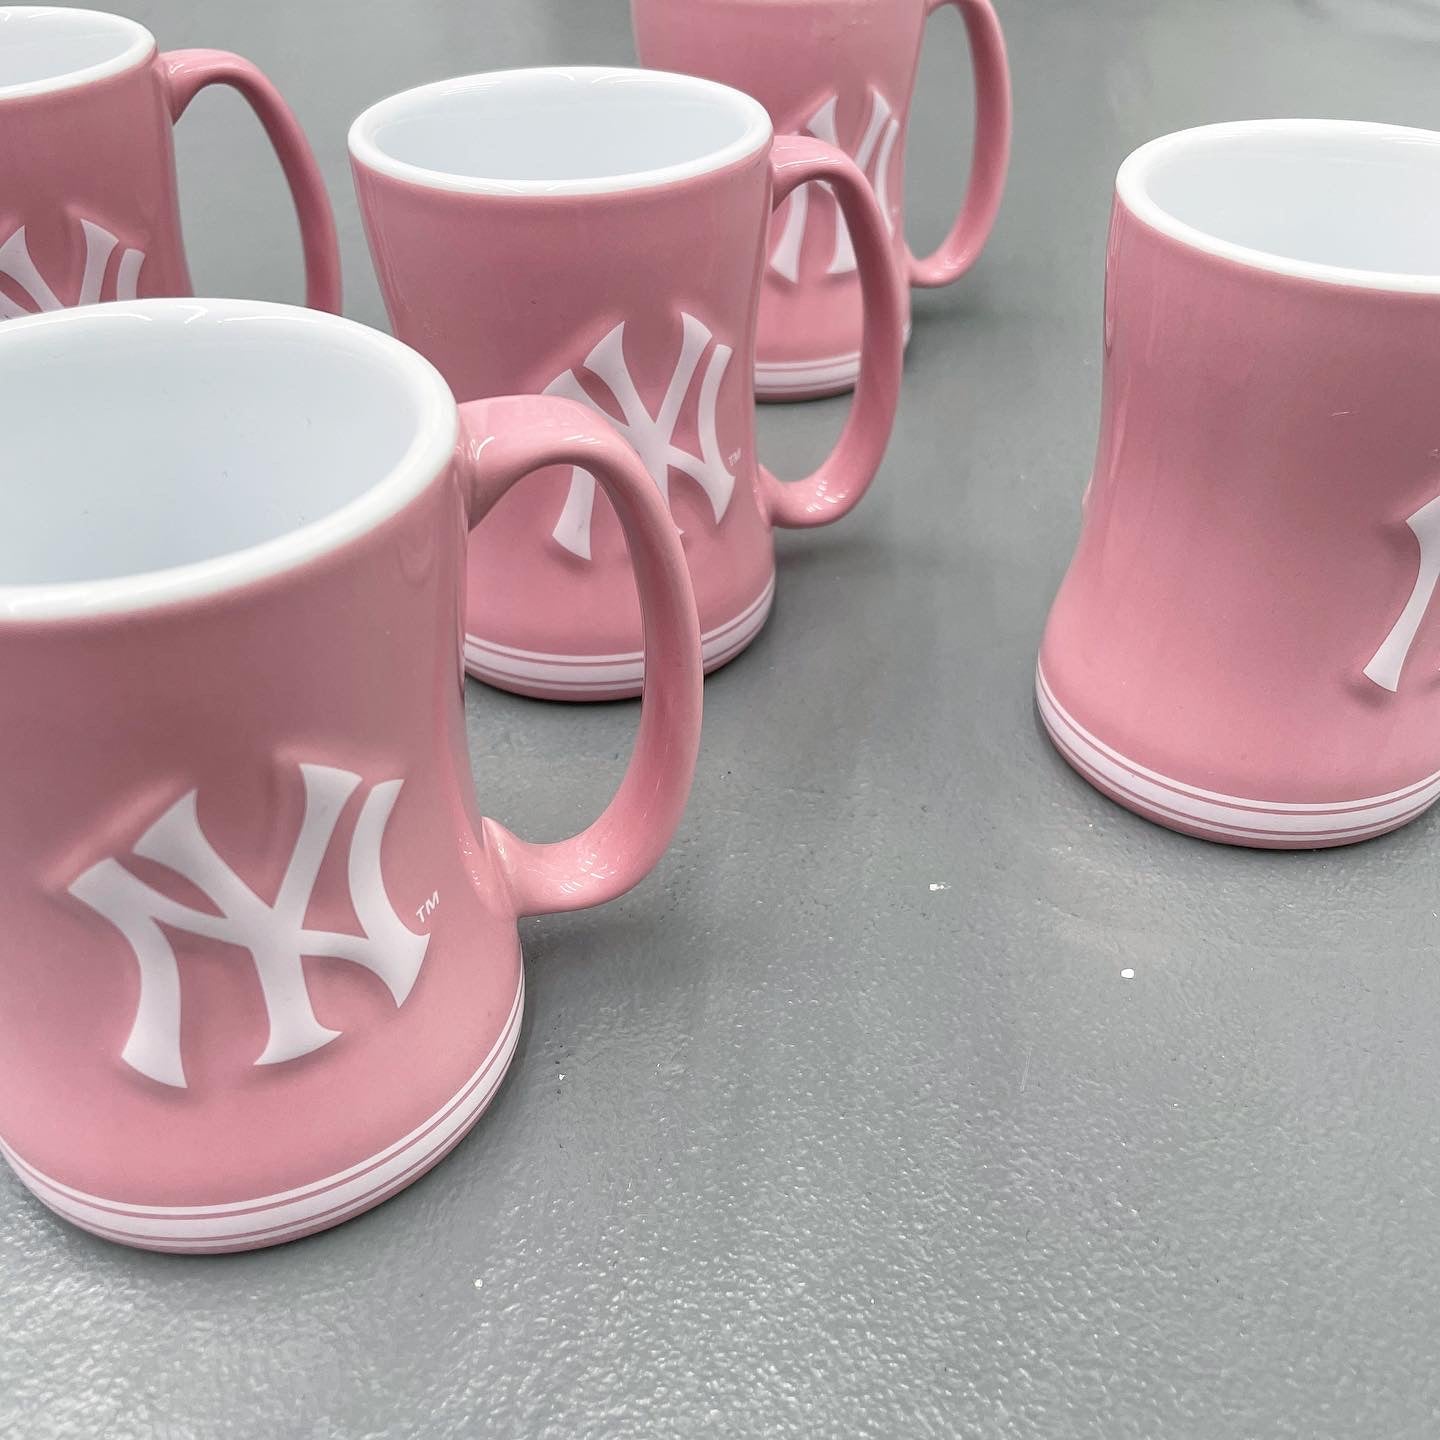 New York Yankees Official Pink Mug